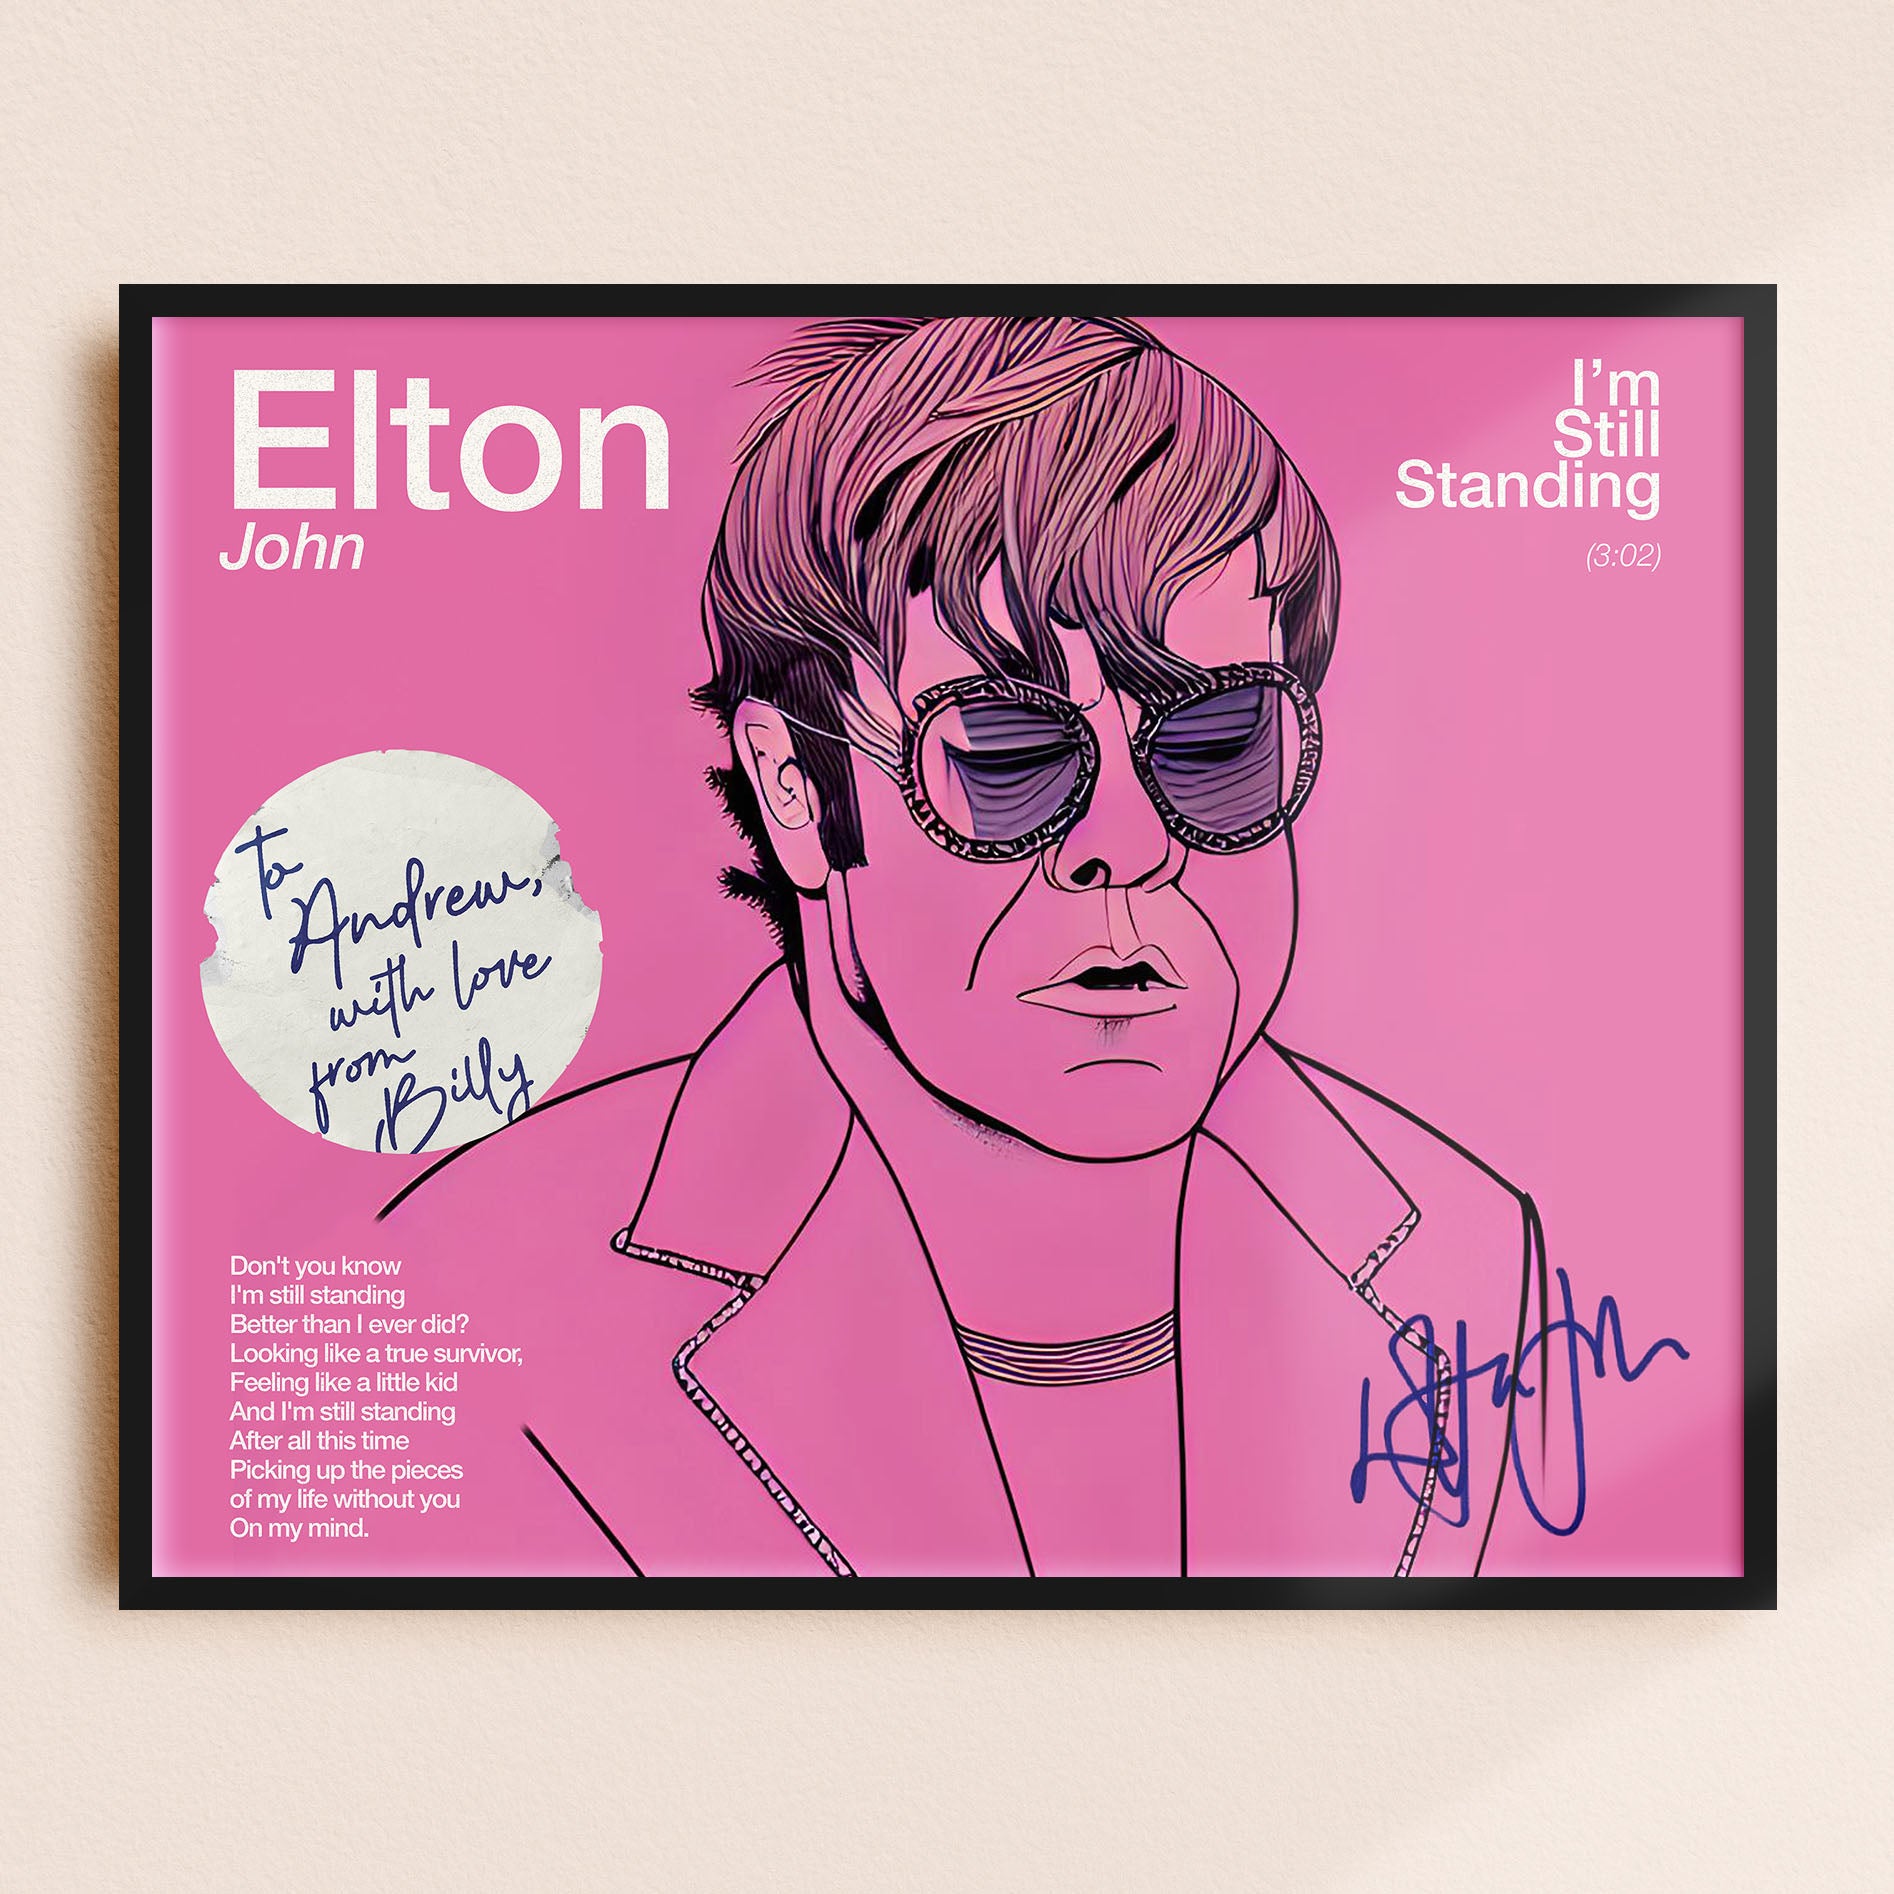 Elton John - I'm Still standing  Elton john, Elton john lyrics, Lyrics